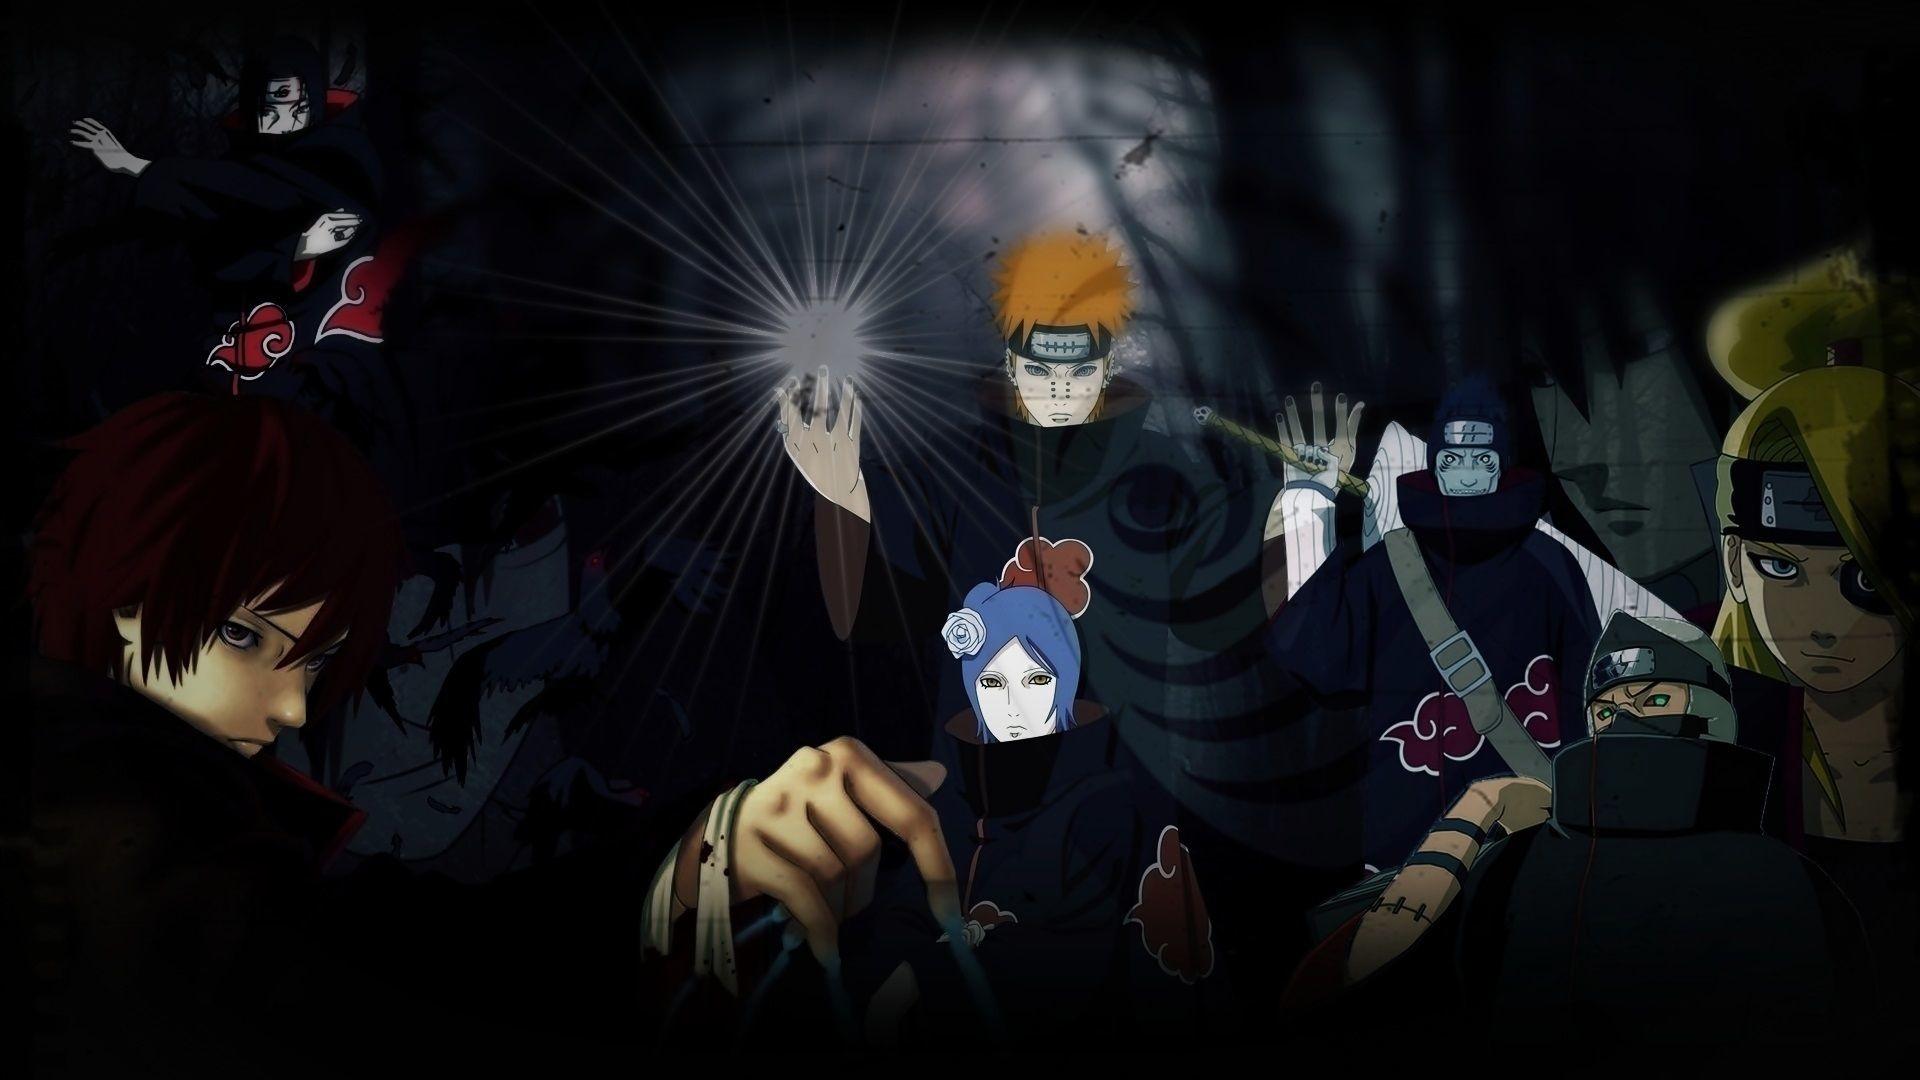 Naruto and Hinata Wallpaper background picture